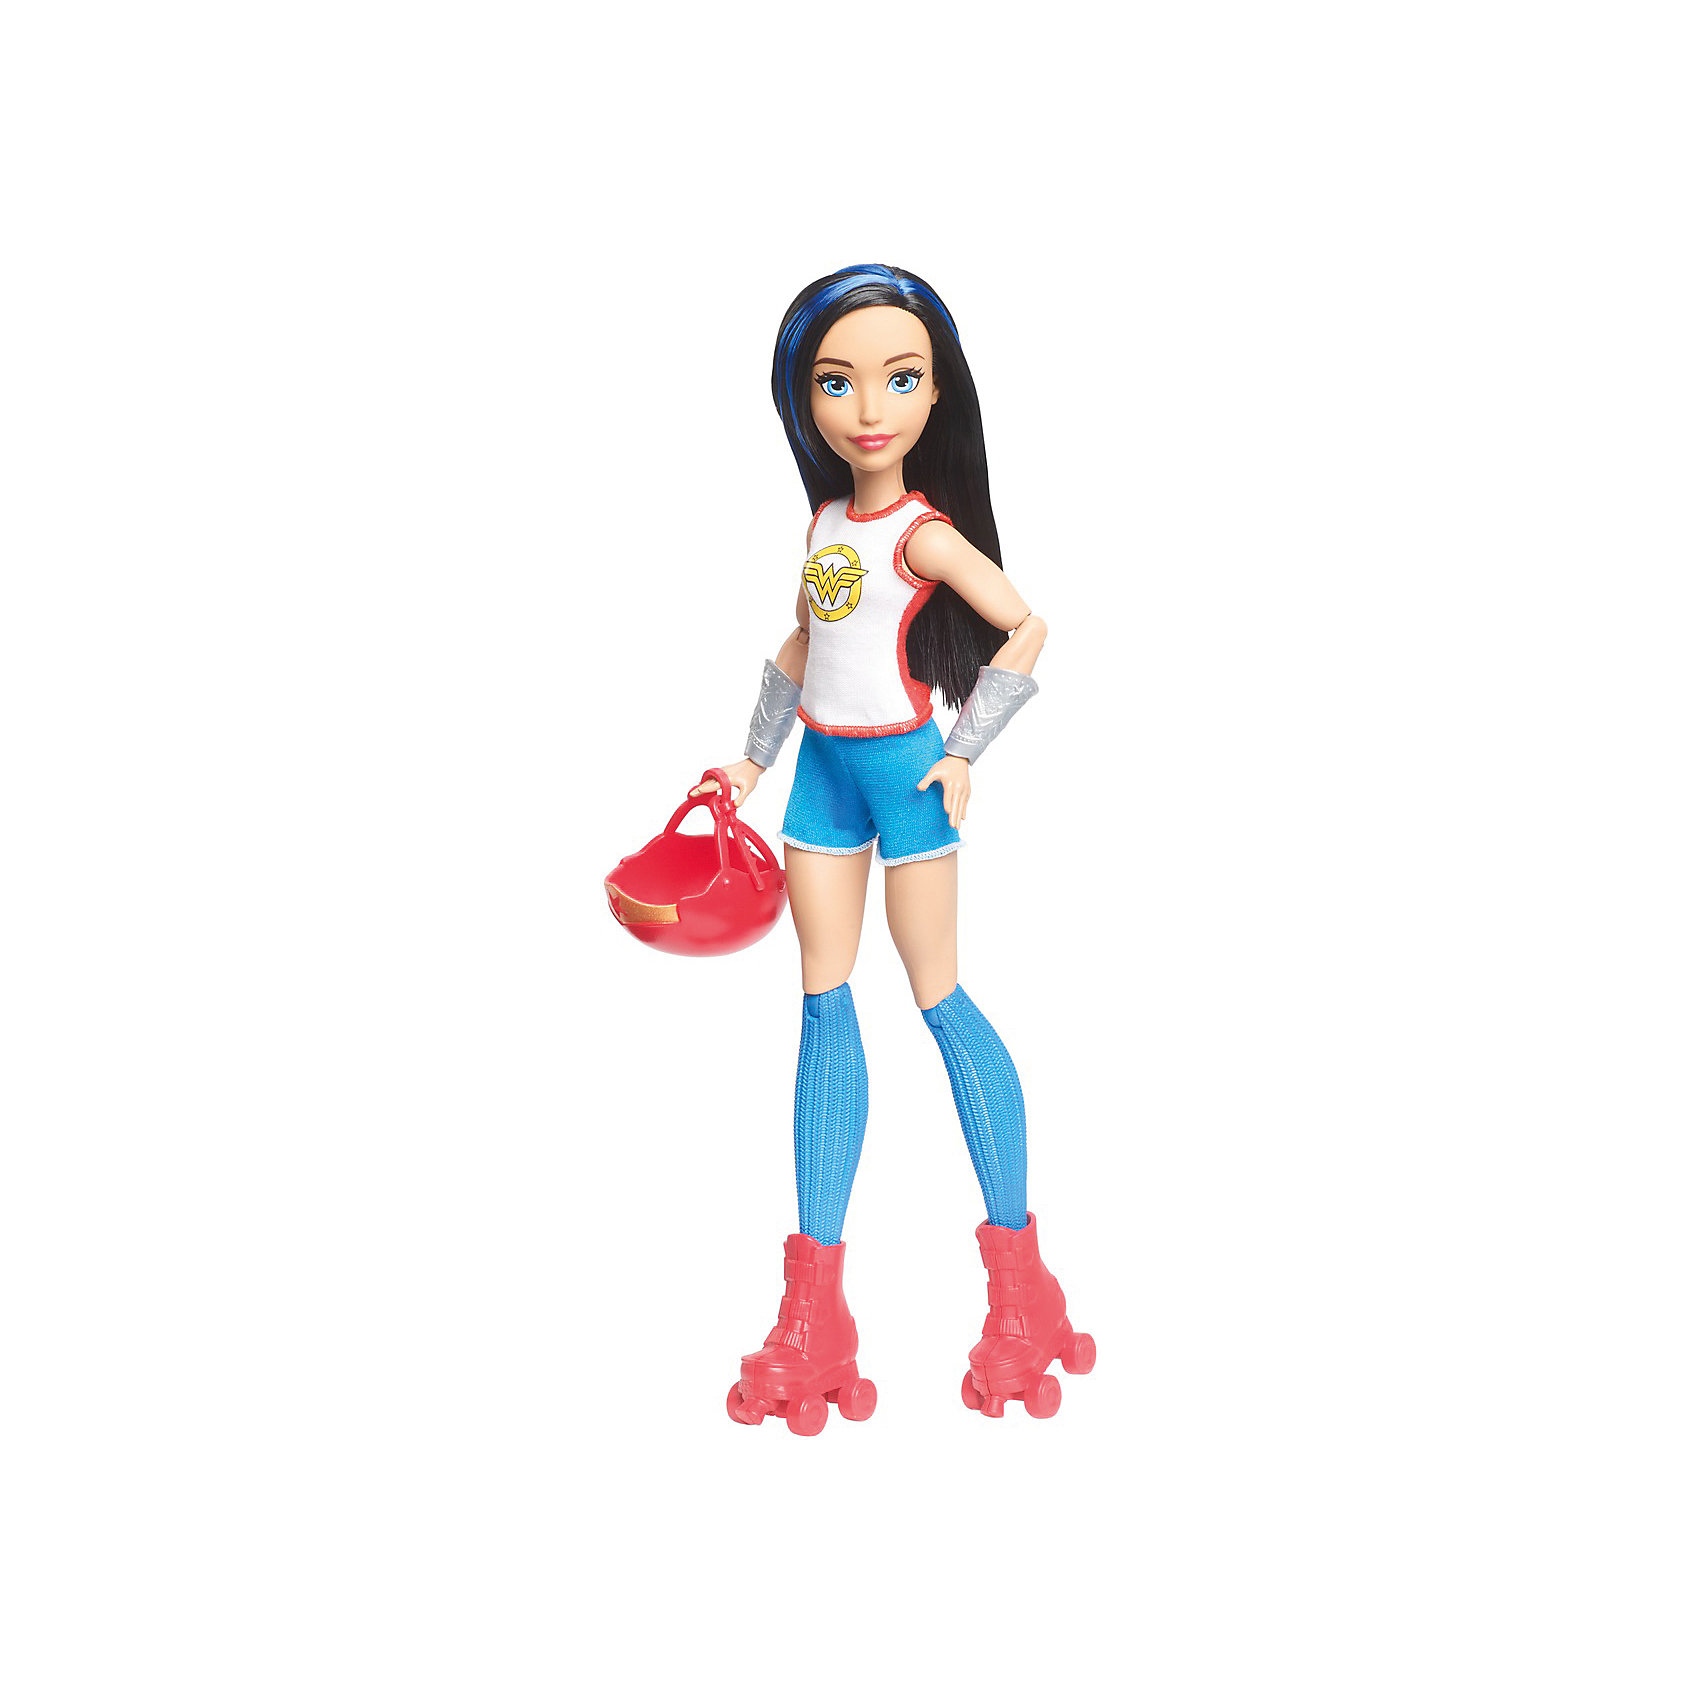 Купить куклу герлз герлз. DC super Hero girls куклы. Кукла Mattel DC super Hero girls супергероини превращения Wonder woman, 28 см, fvh35. Набор кукол DC super Hero girls. Кукла Хиро Хай на роликах.